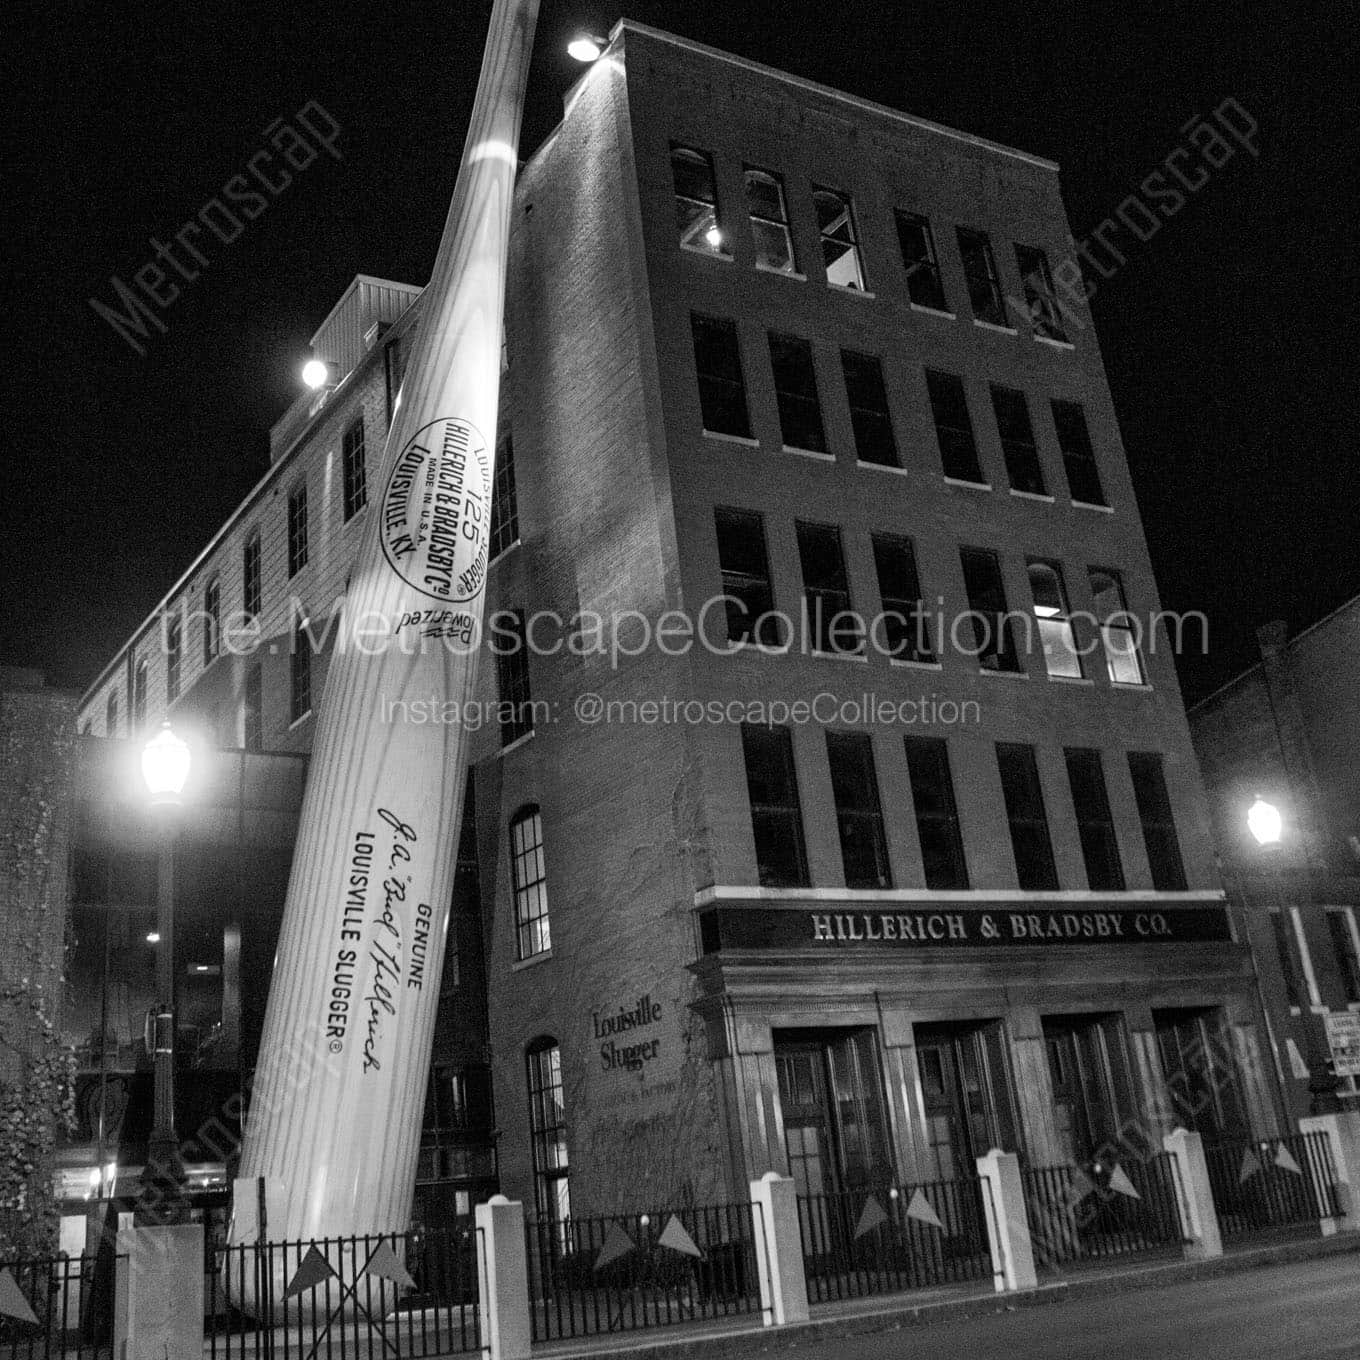 louisville slugger museum at night Black & White Office Art